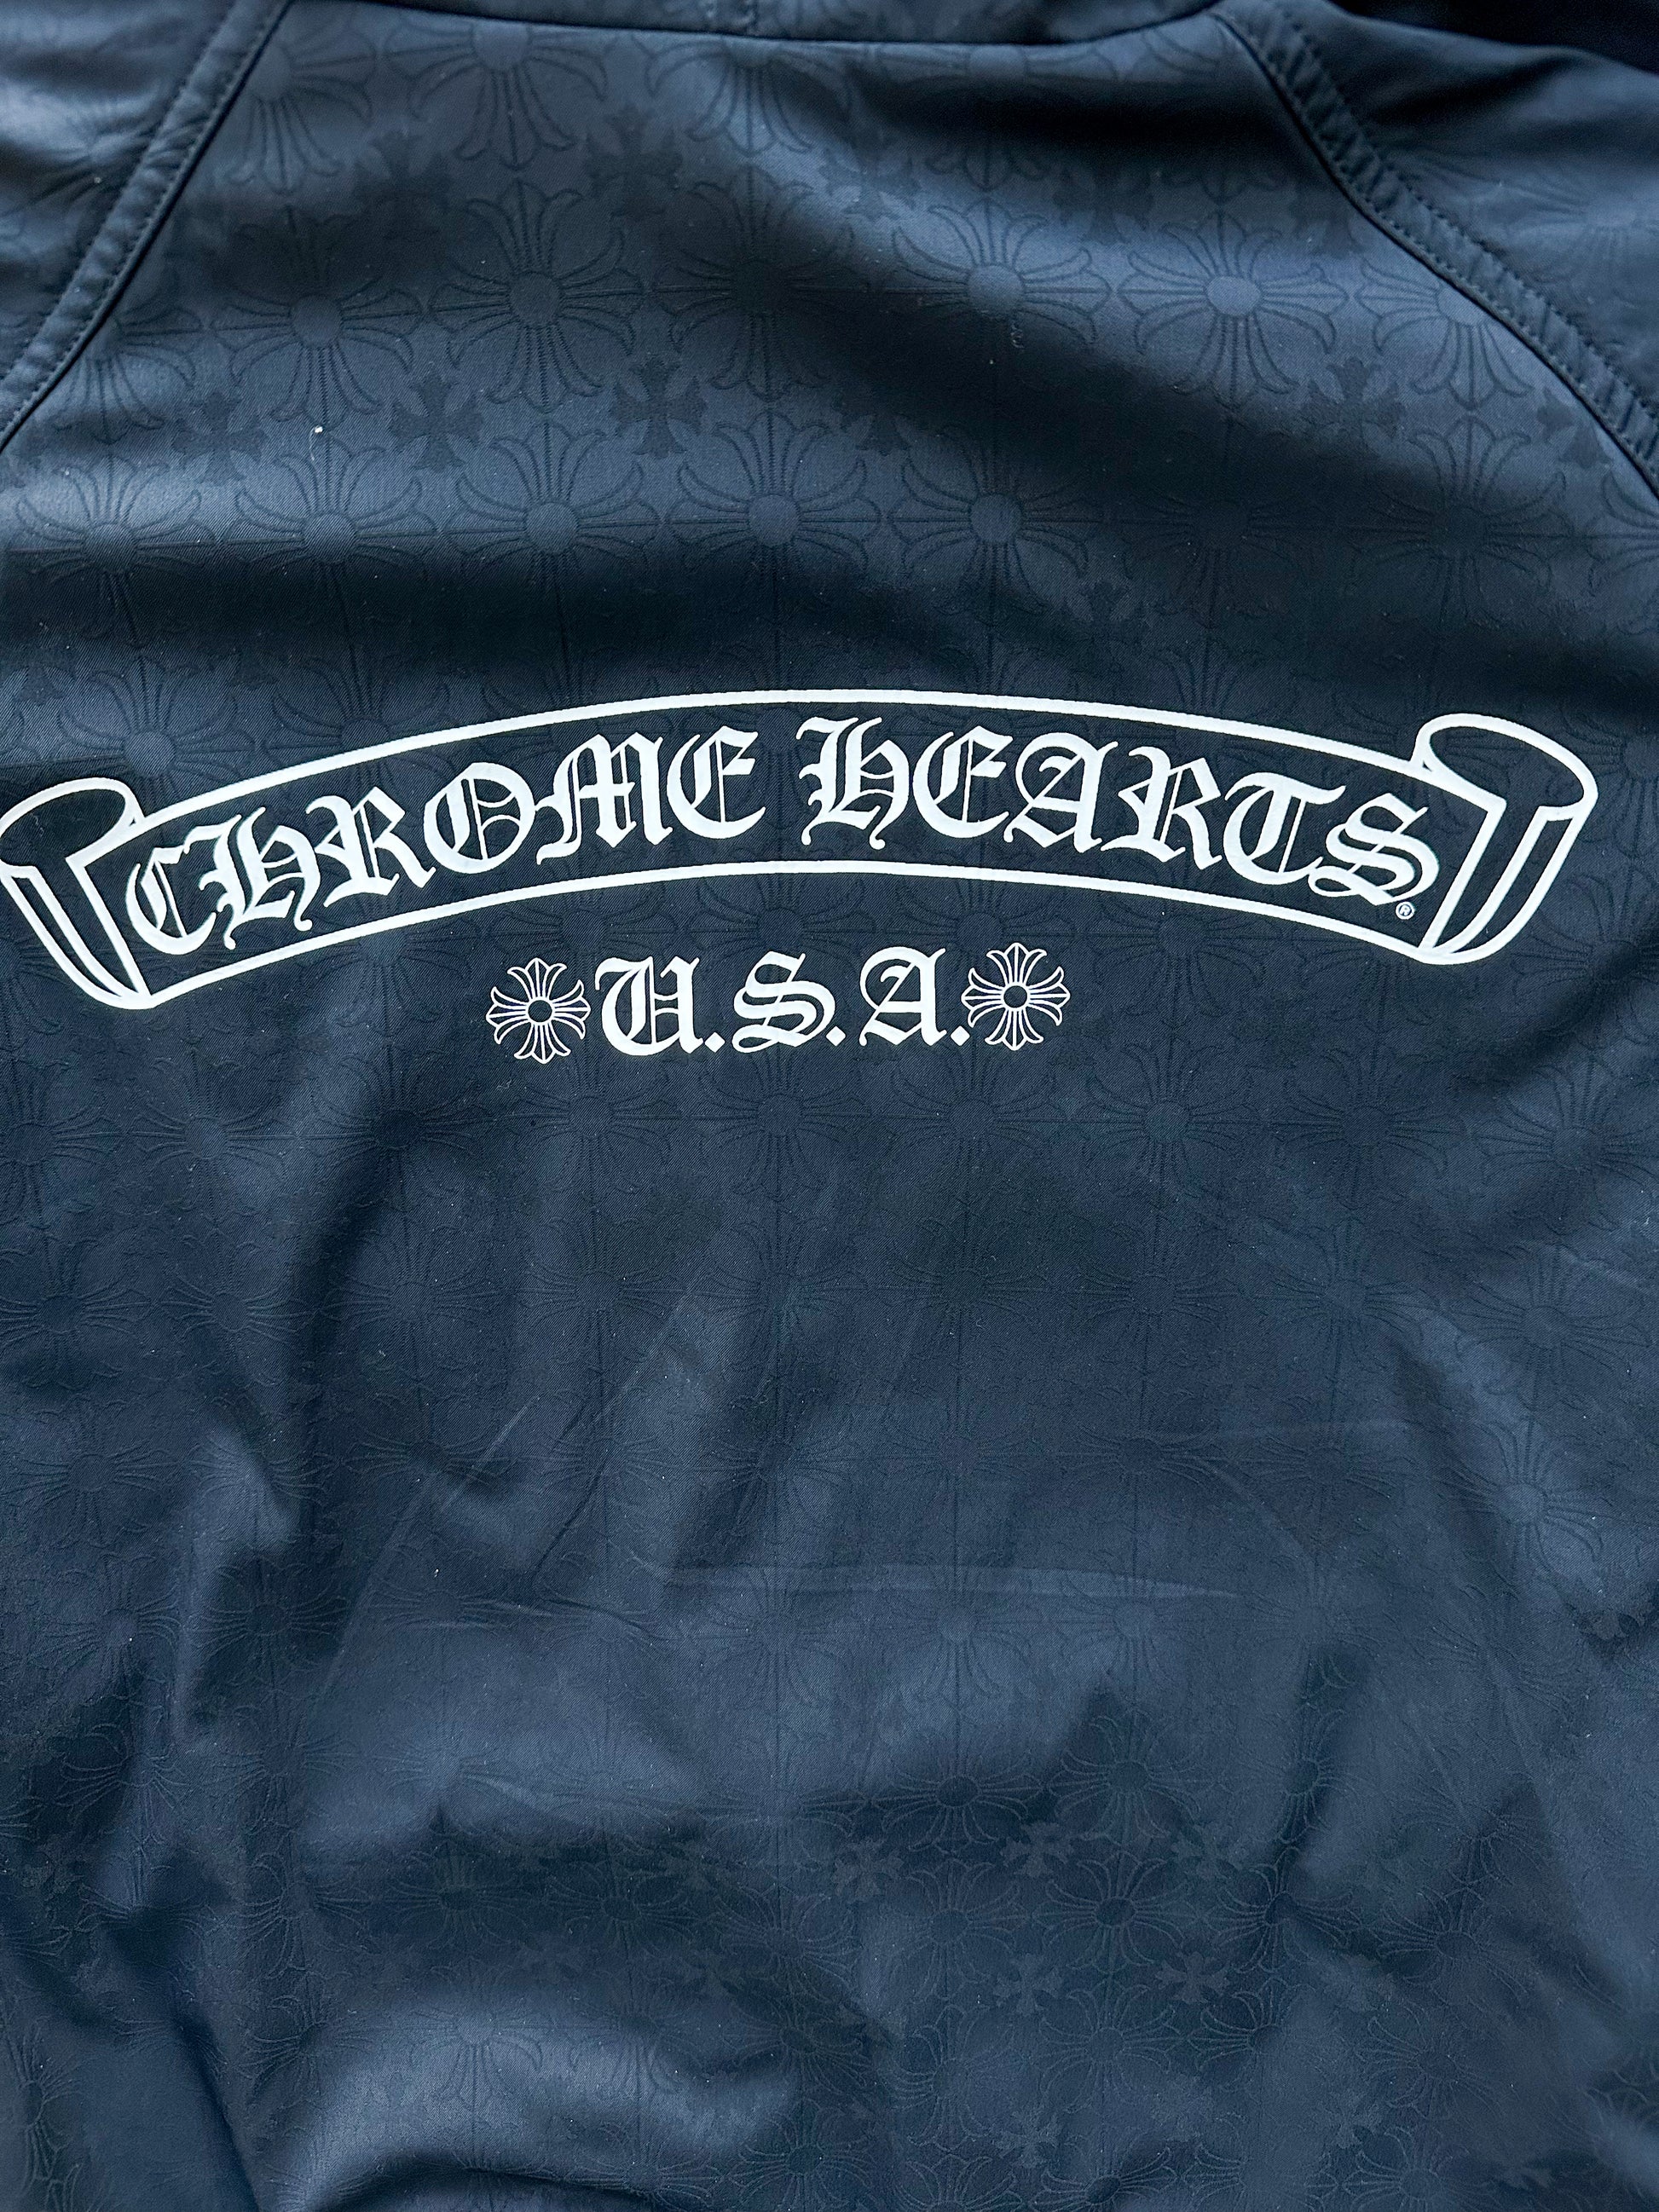 Jacket Makers Chrome Hearts Jeans Jacket